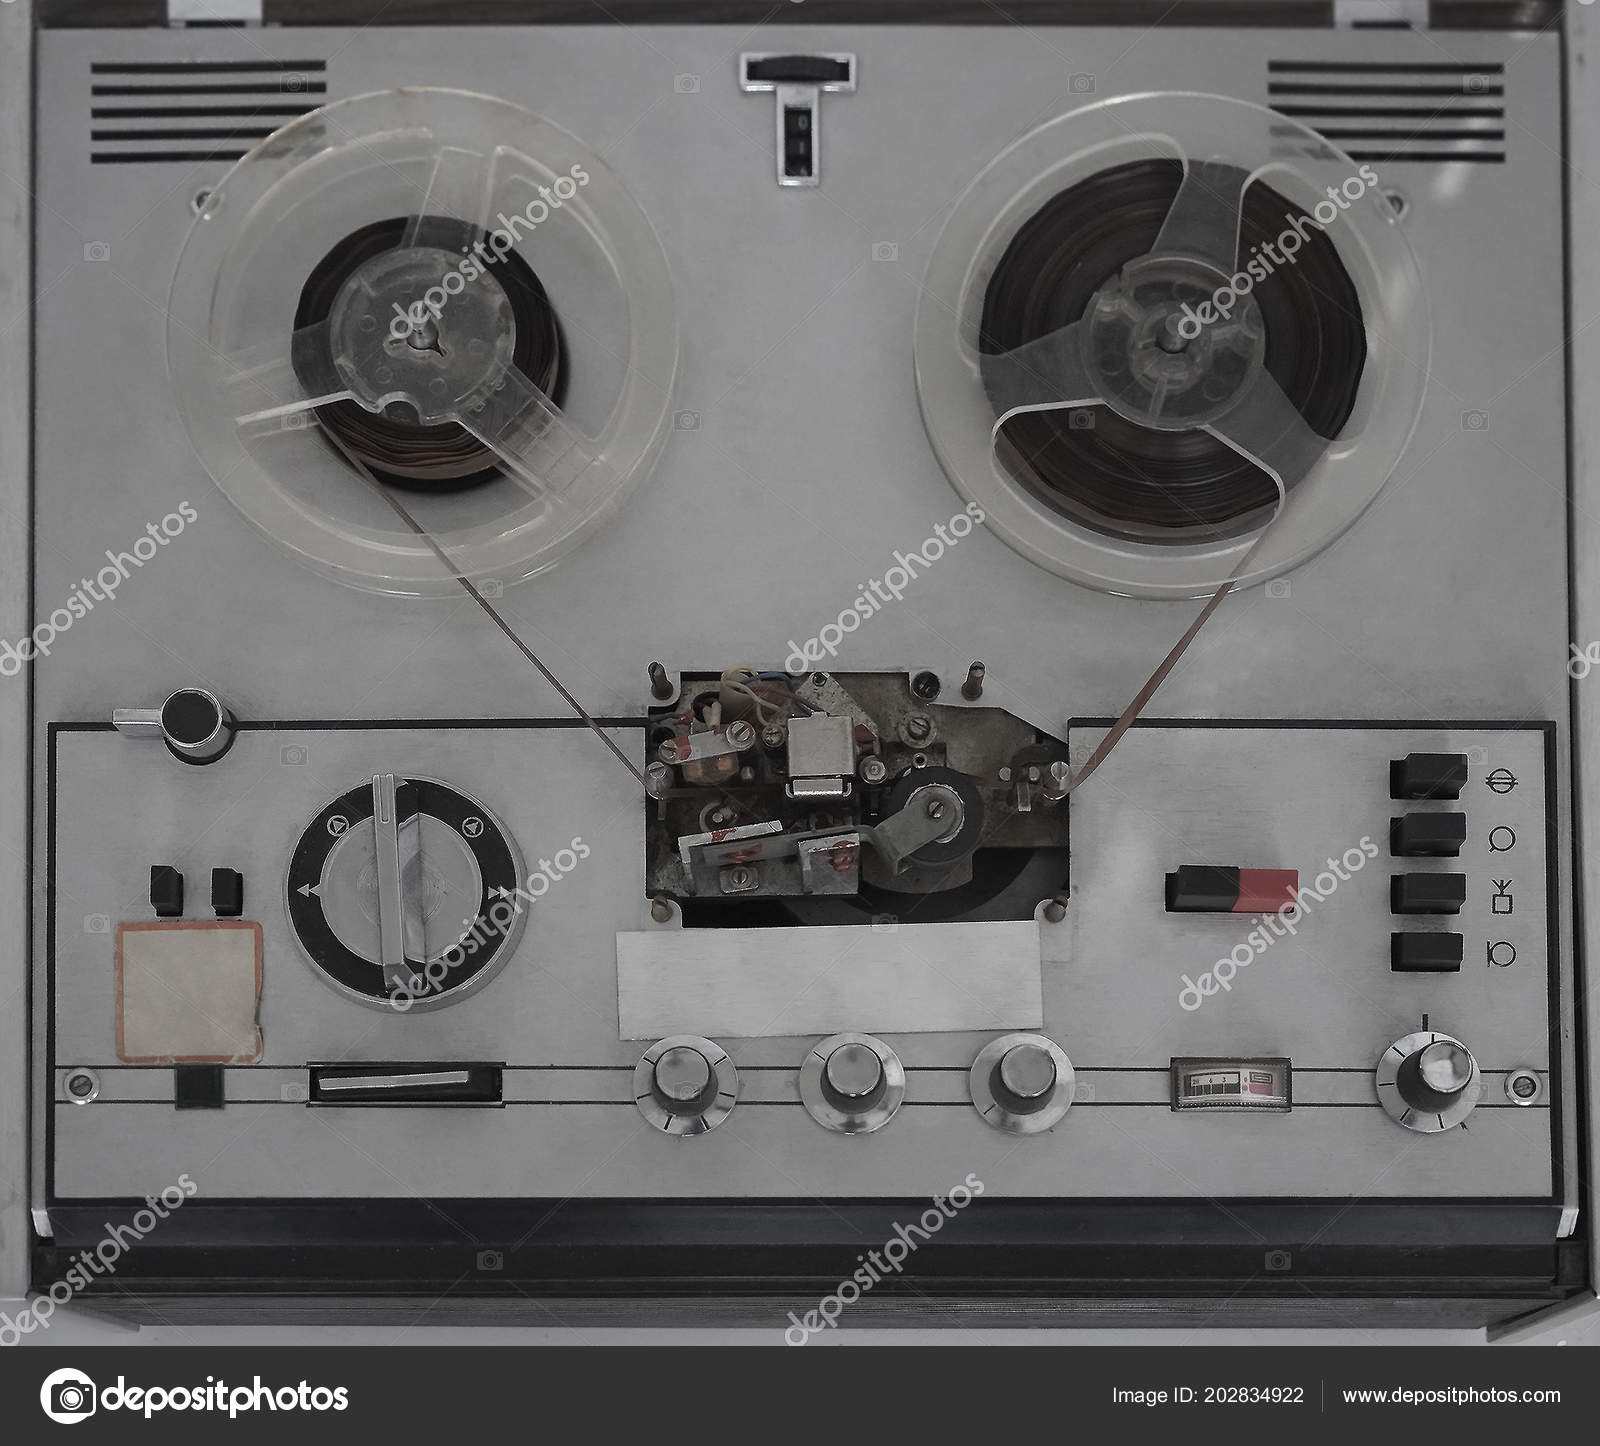 https://st4.depositphotos.com/5647624/20283/i/1600/depositphotos_202834922-stock-photo-old-reel-tape-recorder-wooden.jpg